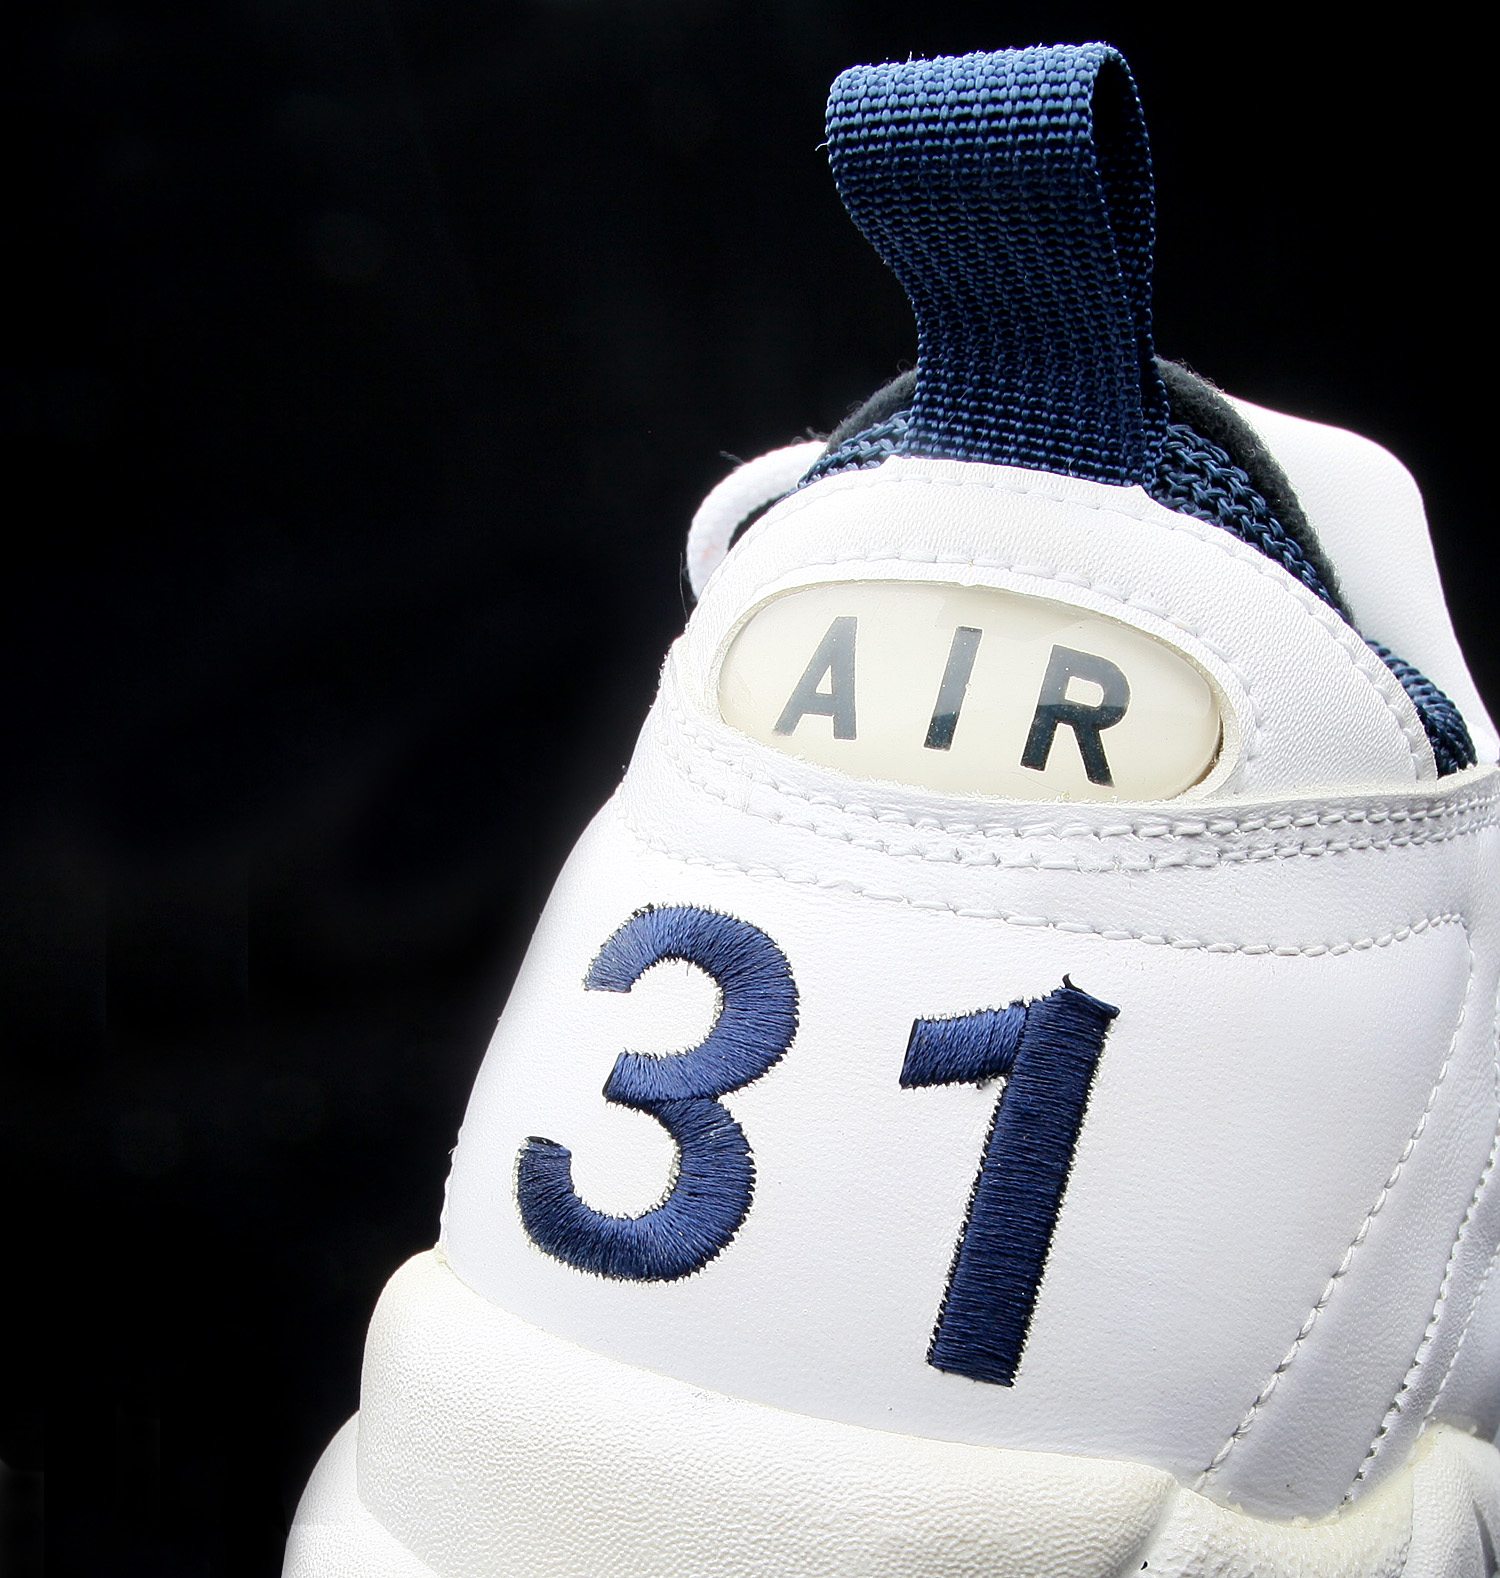 A Detailed Look At Reggie Miller's Original Nike Air Money PE | Nice Kicks